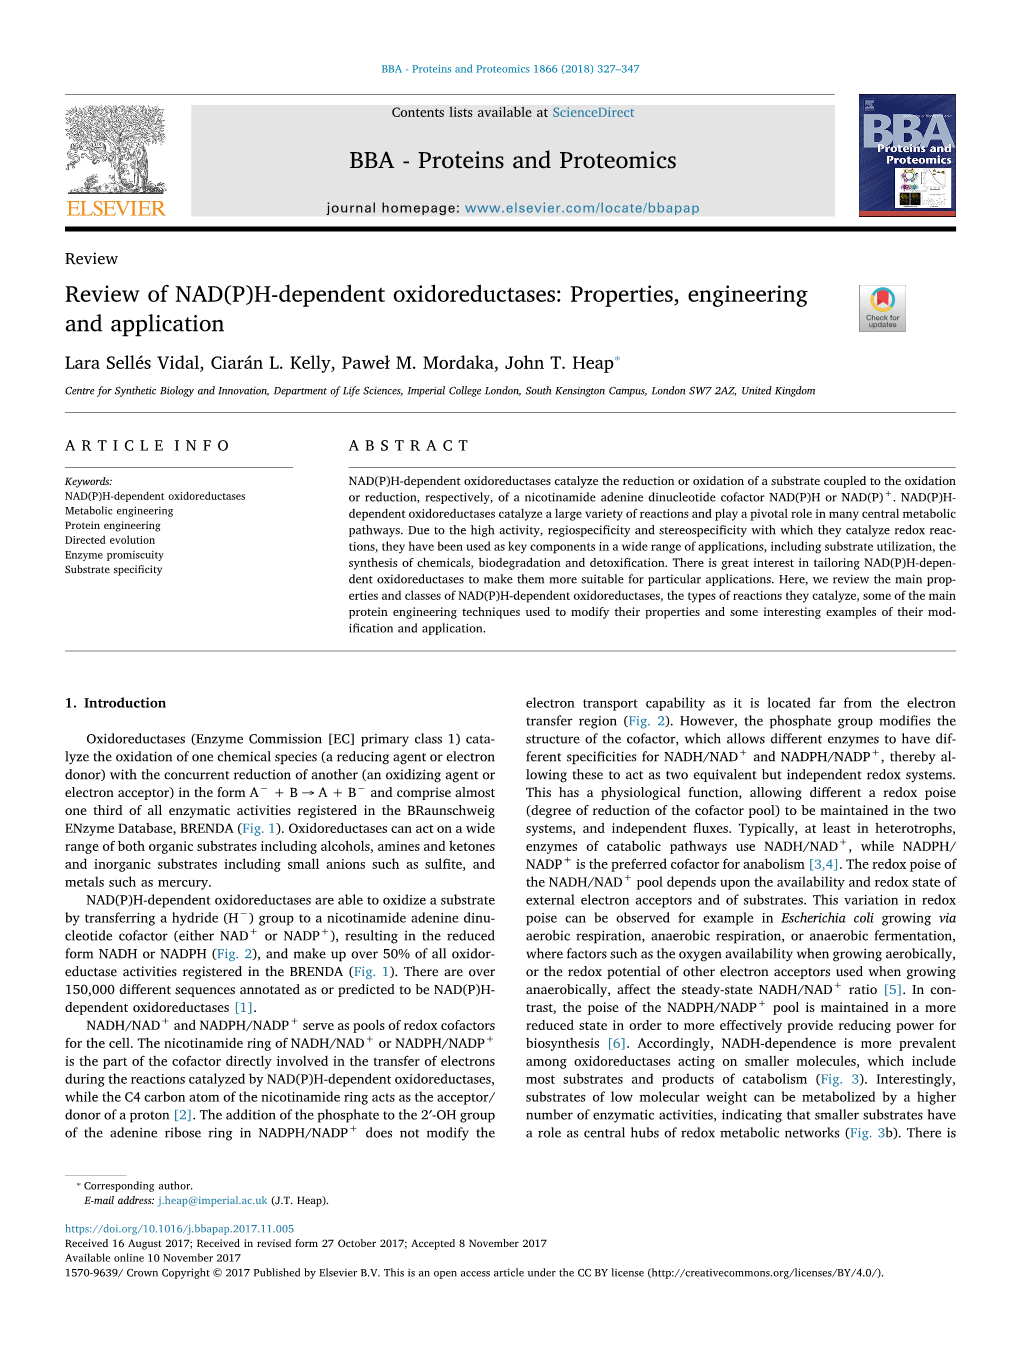 Review of NAD(P)H-Dependent Oxidoreductases: Properties, Engineering T and Application ⁎ Lara Sellés Vidal, Ciarán L